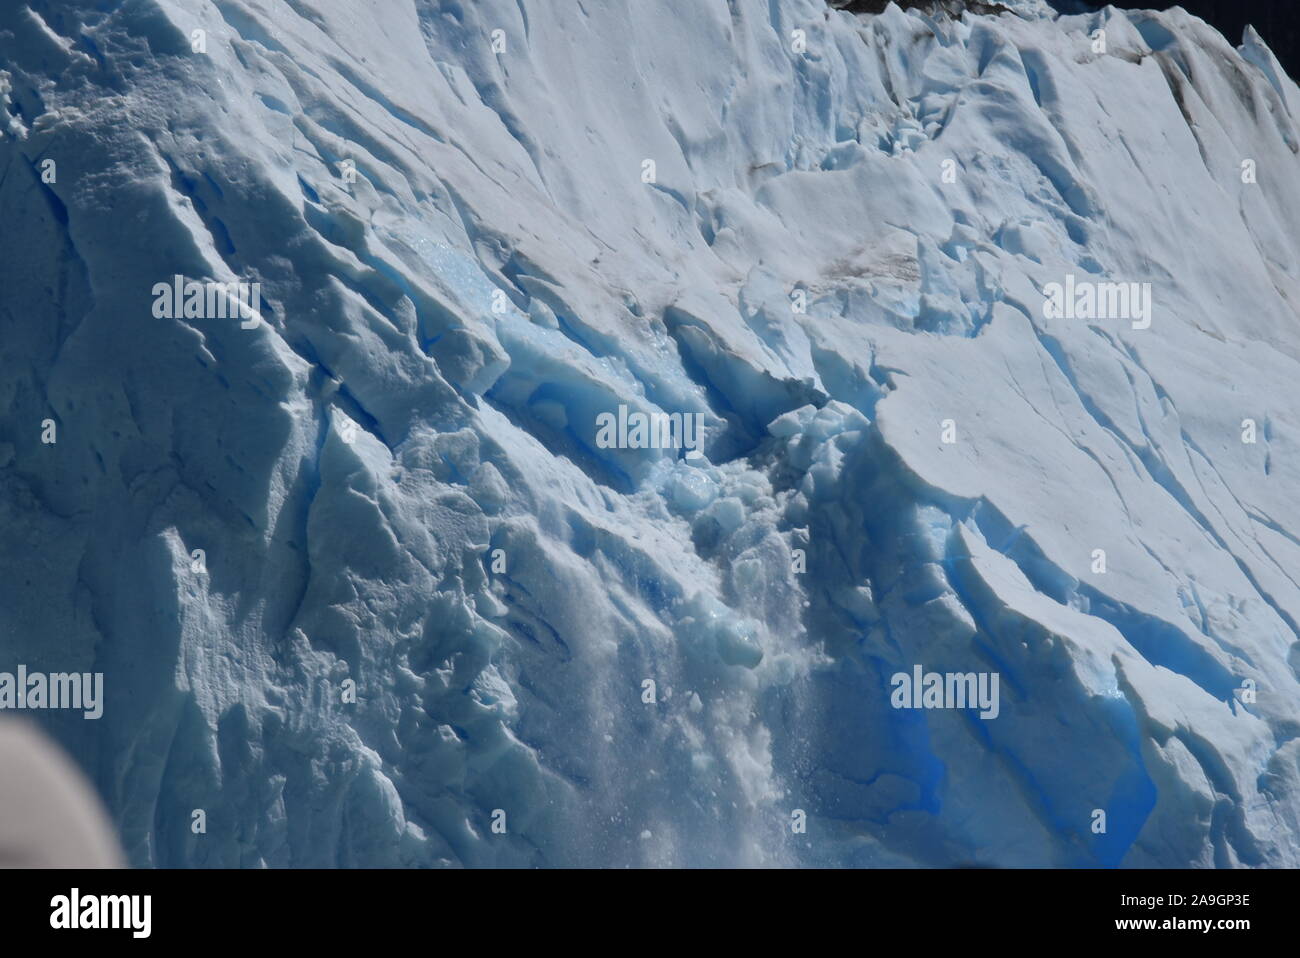 Glacier in Patagonia, Argentina Stock Photo